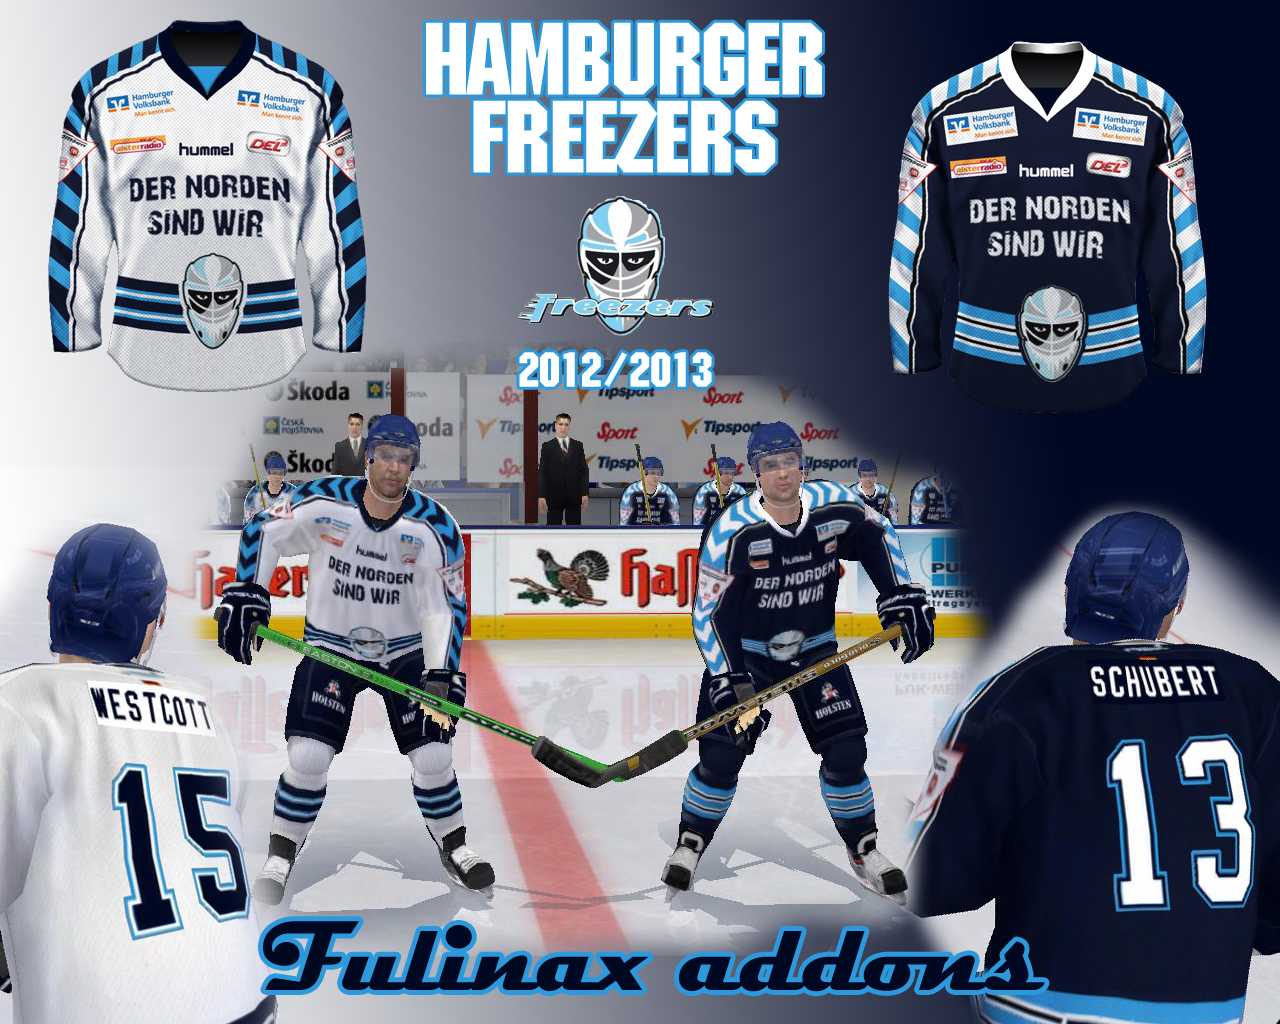 Hamburger Freezers 2013